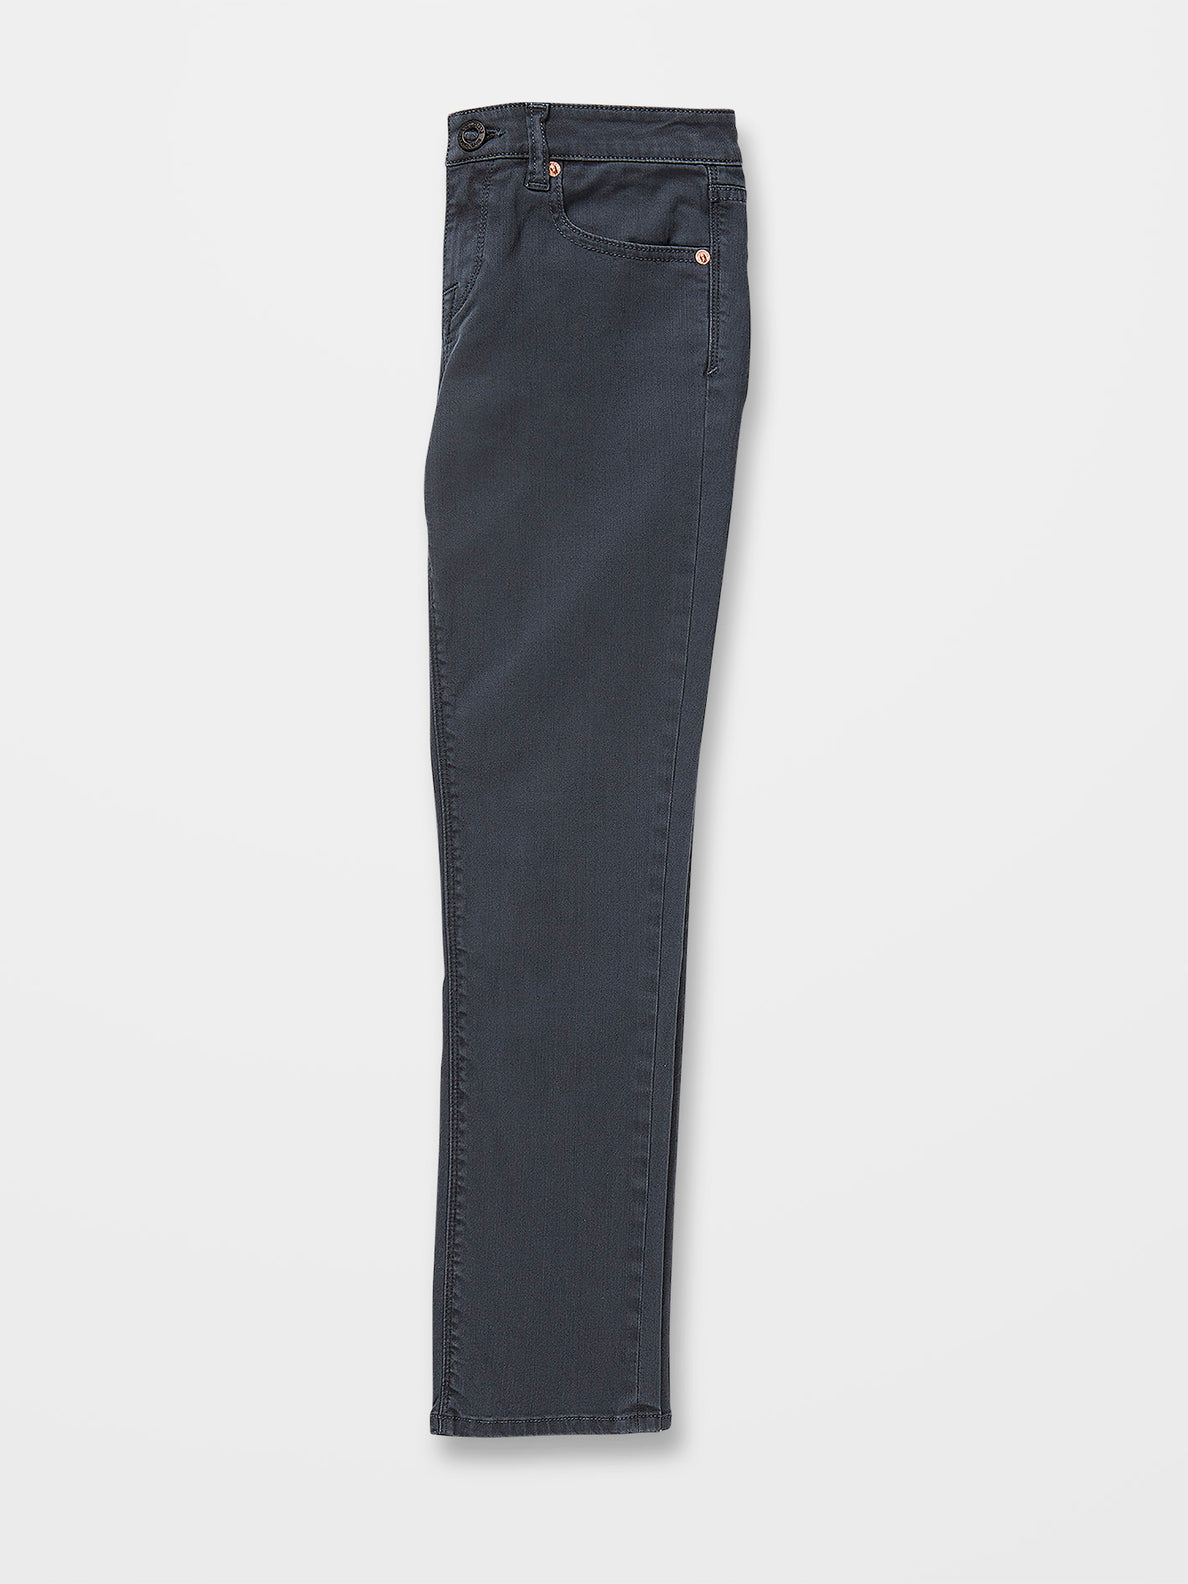 Jeans colorati Vorta - MARINA BLUE - (KIDS) (C1932230_MRB) [1]